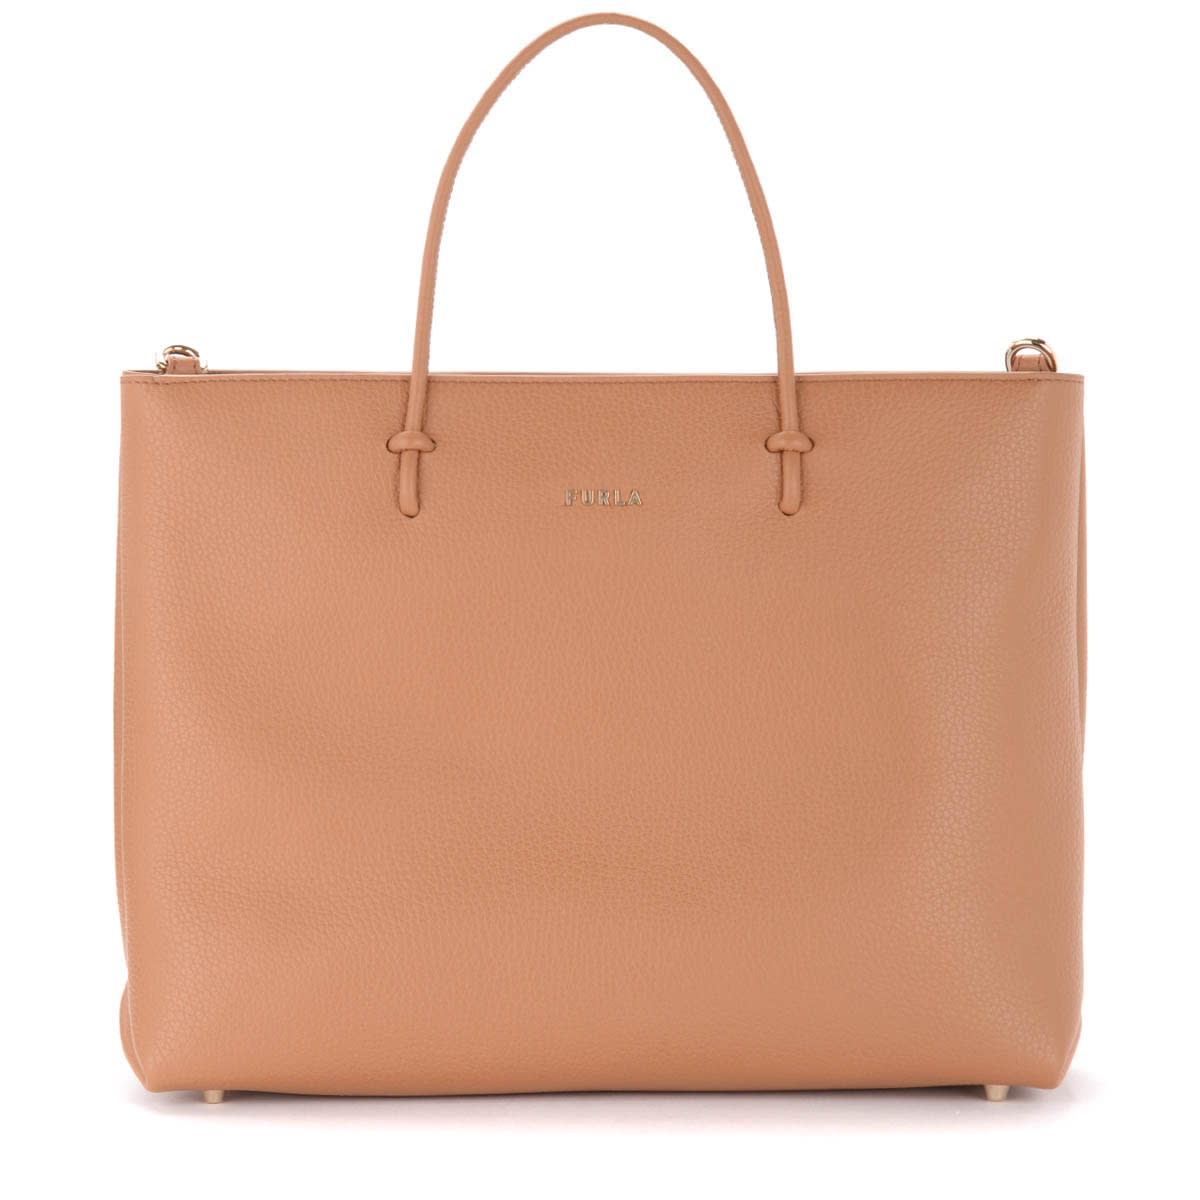 Furla Essential M Tote Bag In Honey-colored Leather